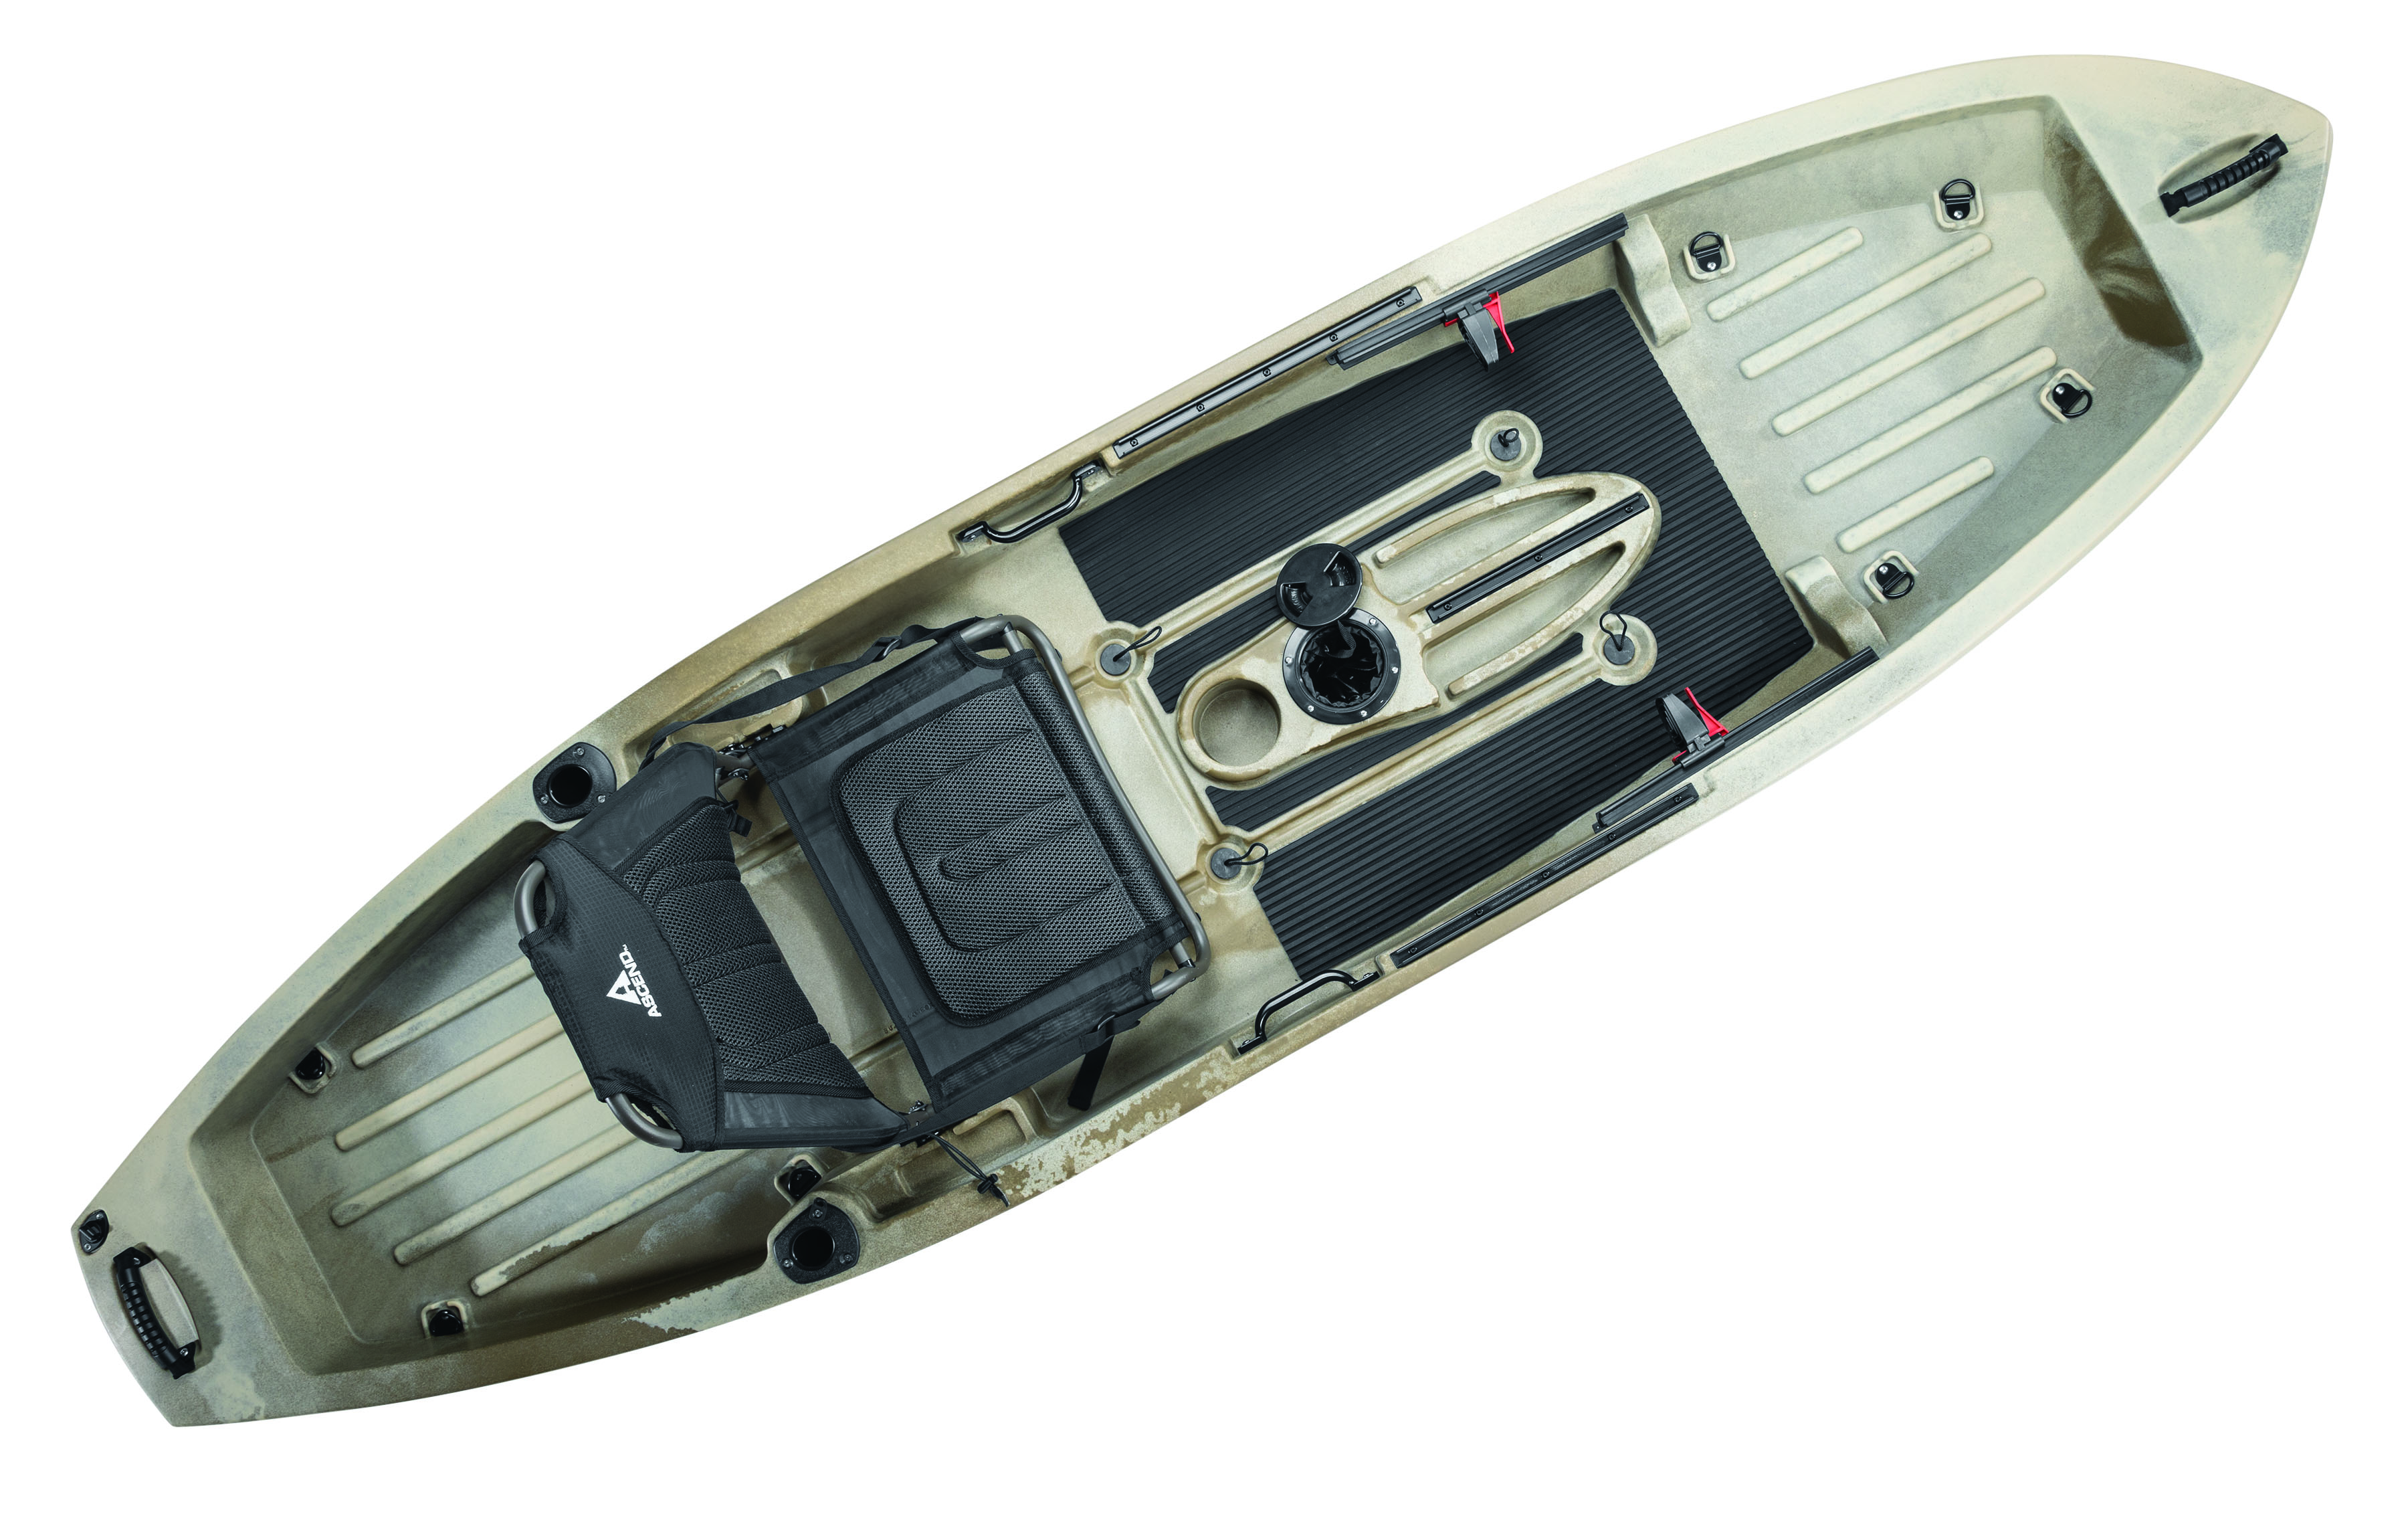 Fishing Kayaks - Pricing, Reviews, Photos & Full Specs [Kayak Angler  Buyer's Guide]